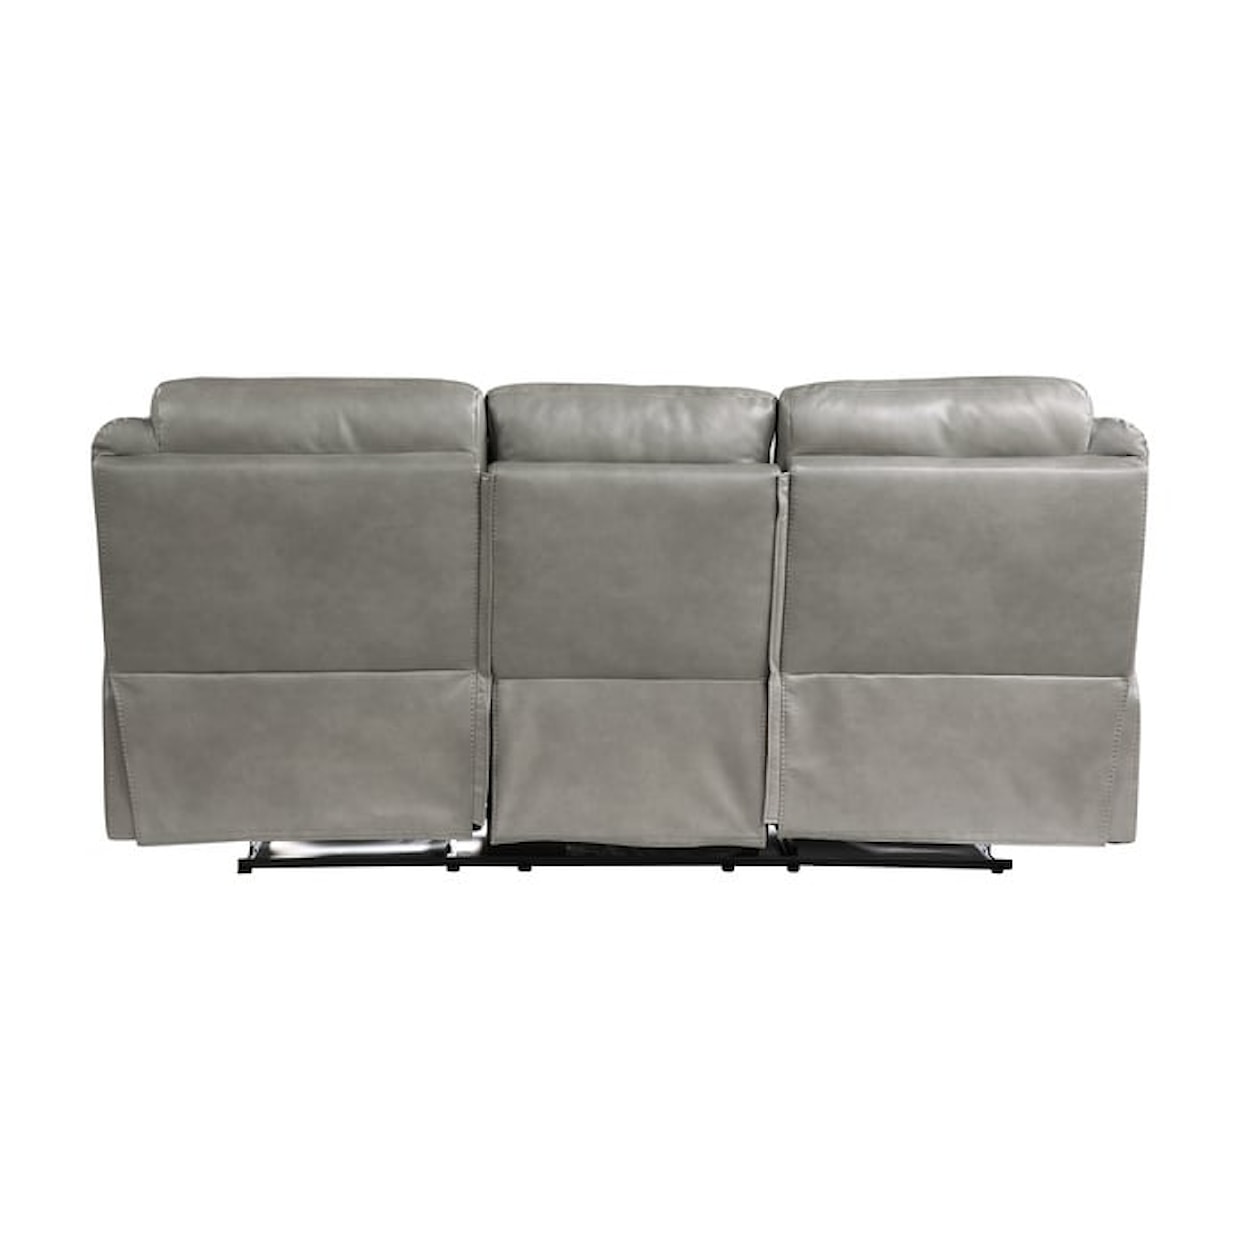 Homelegance Furniture Aram Dual Reclining Sofa